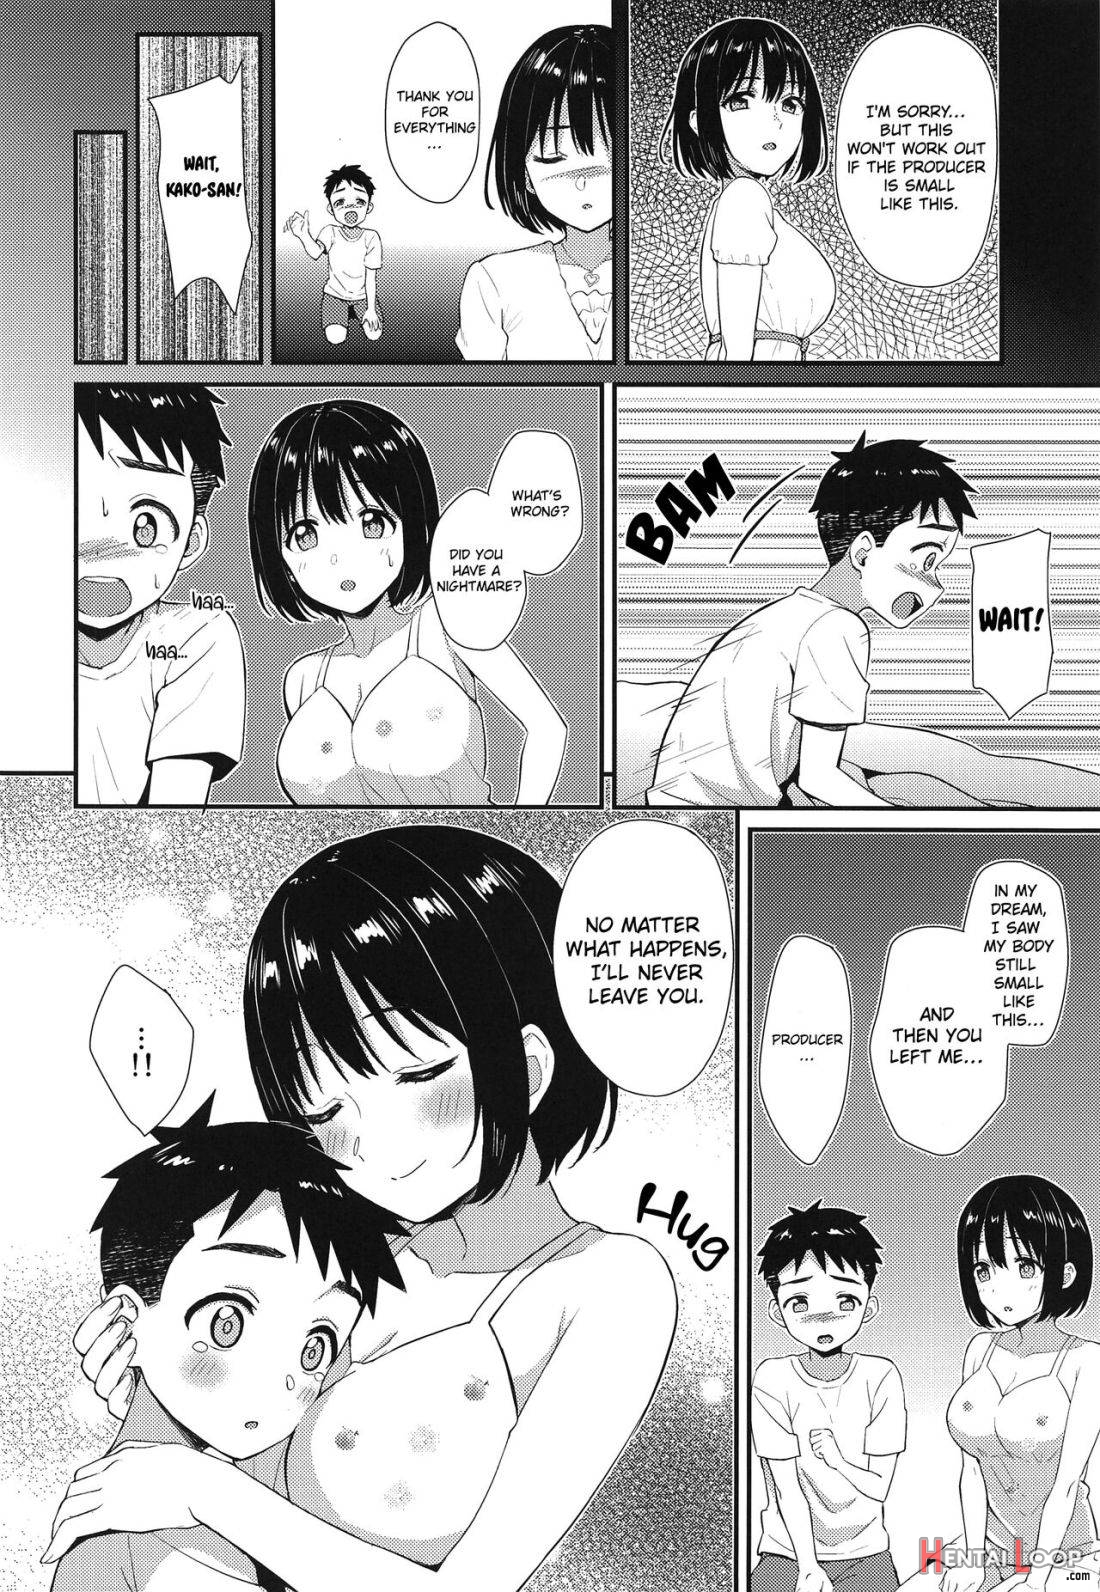 Kako-san to Shota P page 21